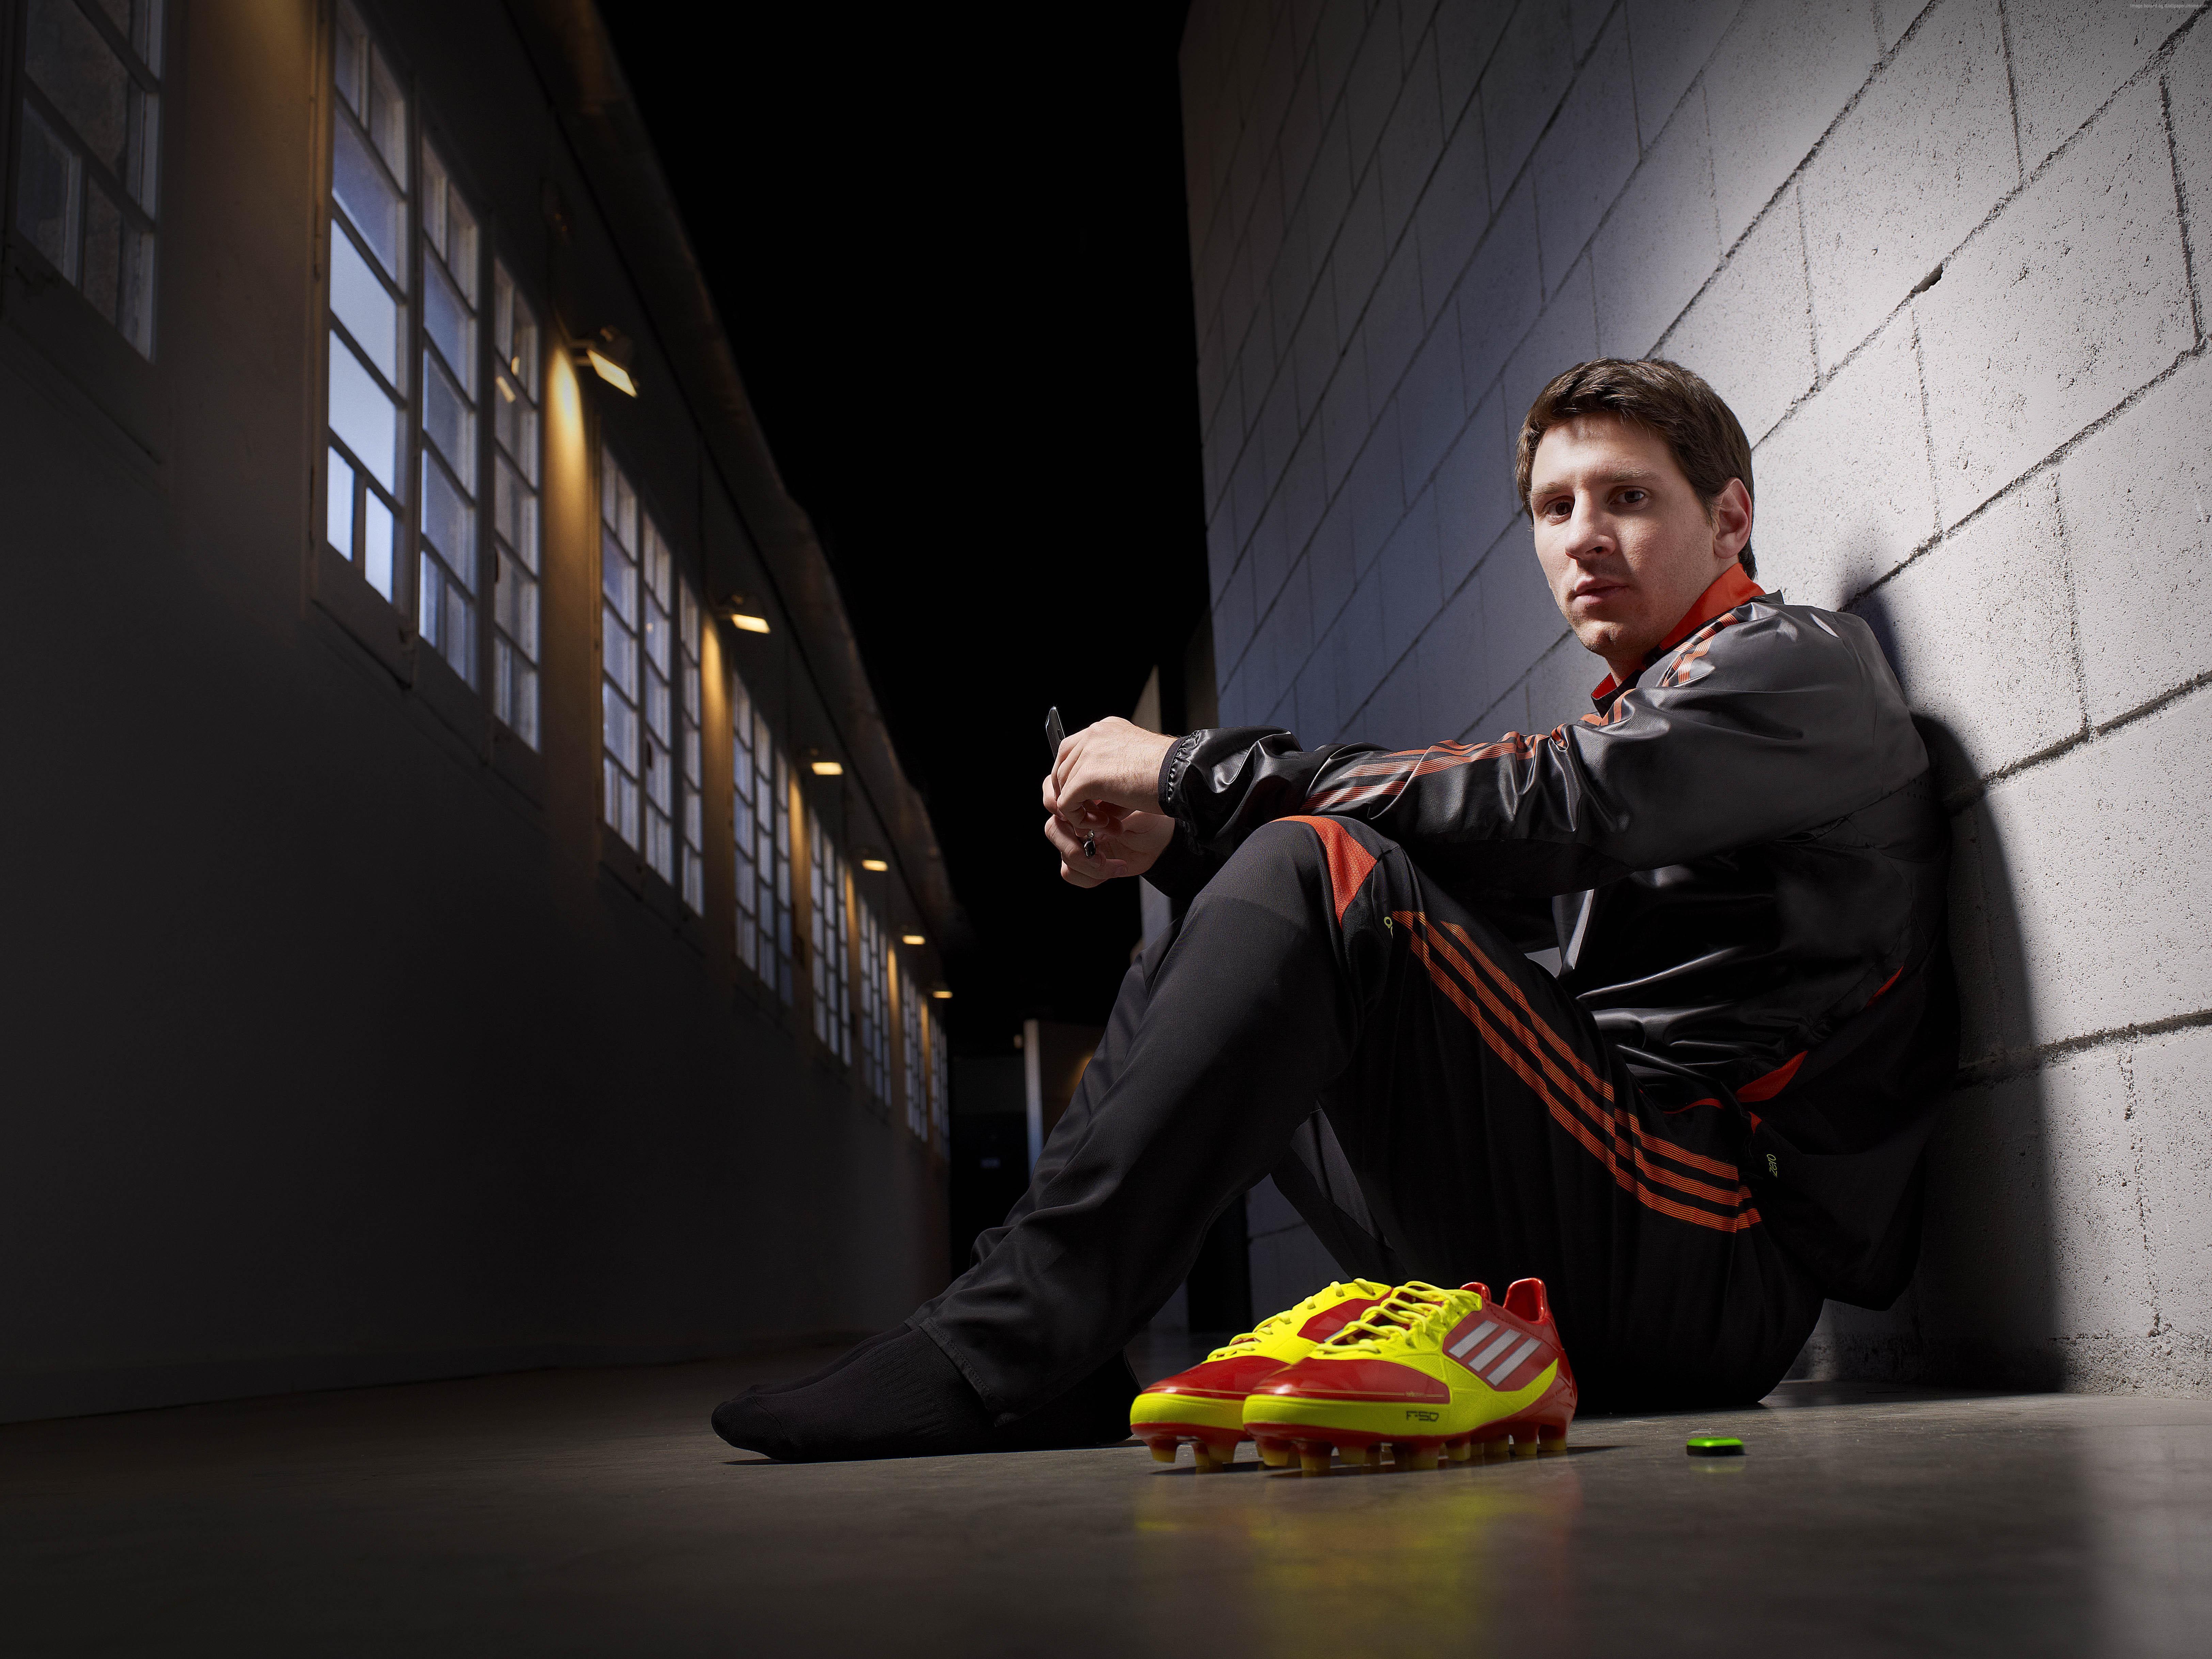 Hd Lionel Messi Football Socker Player Free Background Mobile Desktop Download Wallpapers